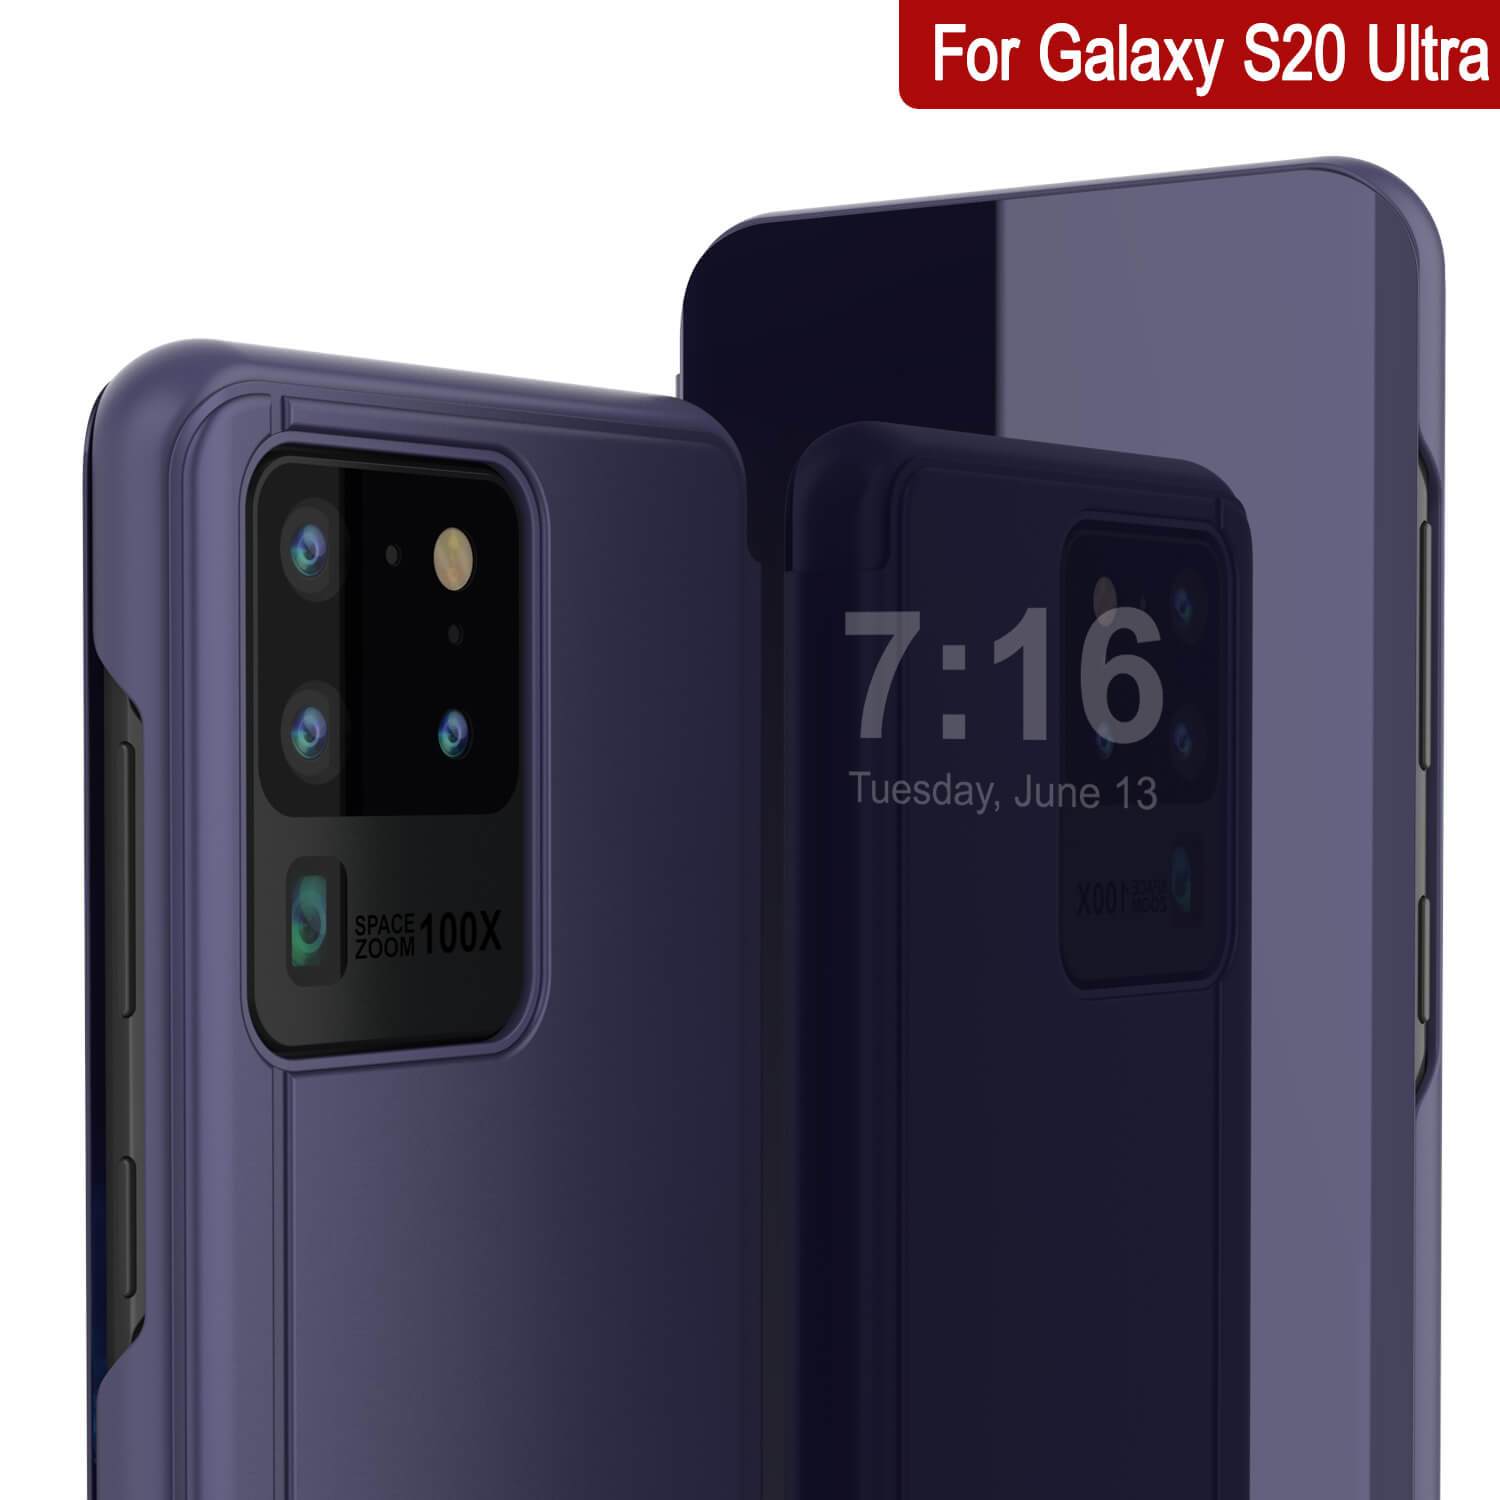 Punkcase Galaxy S20 Ultra Reflector Case Protective Flip Cover [Purple]